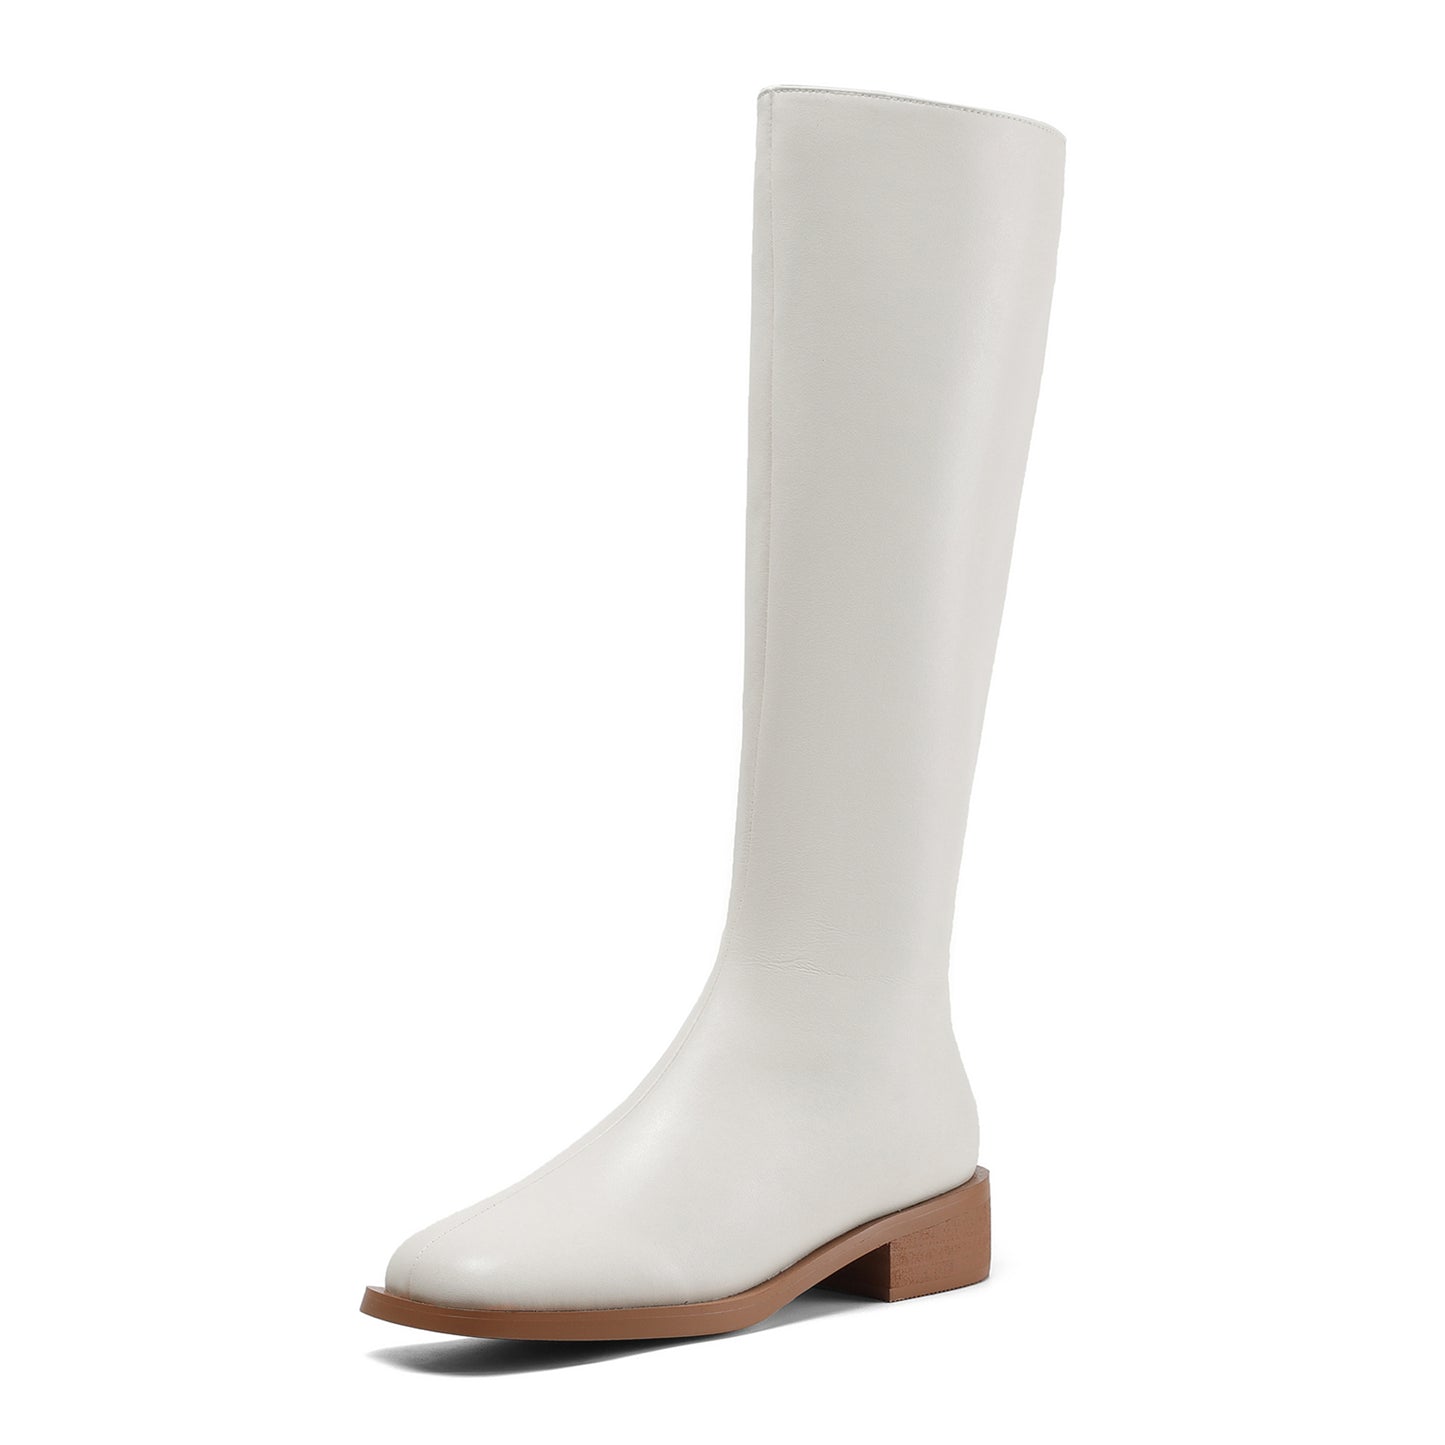 TinaCus Women's Handmade Genuine Leather Square Toe Side Zip Up Block Heel Knee High Boots